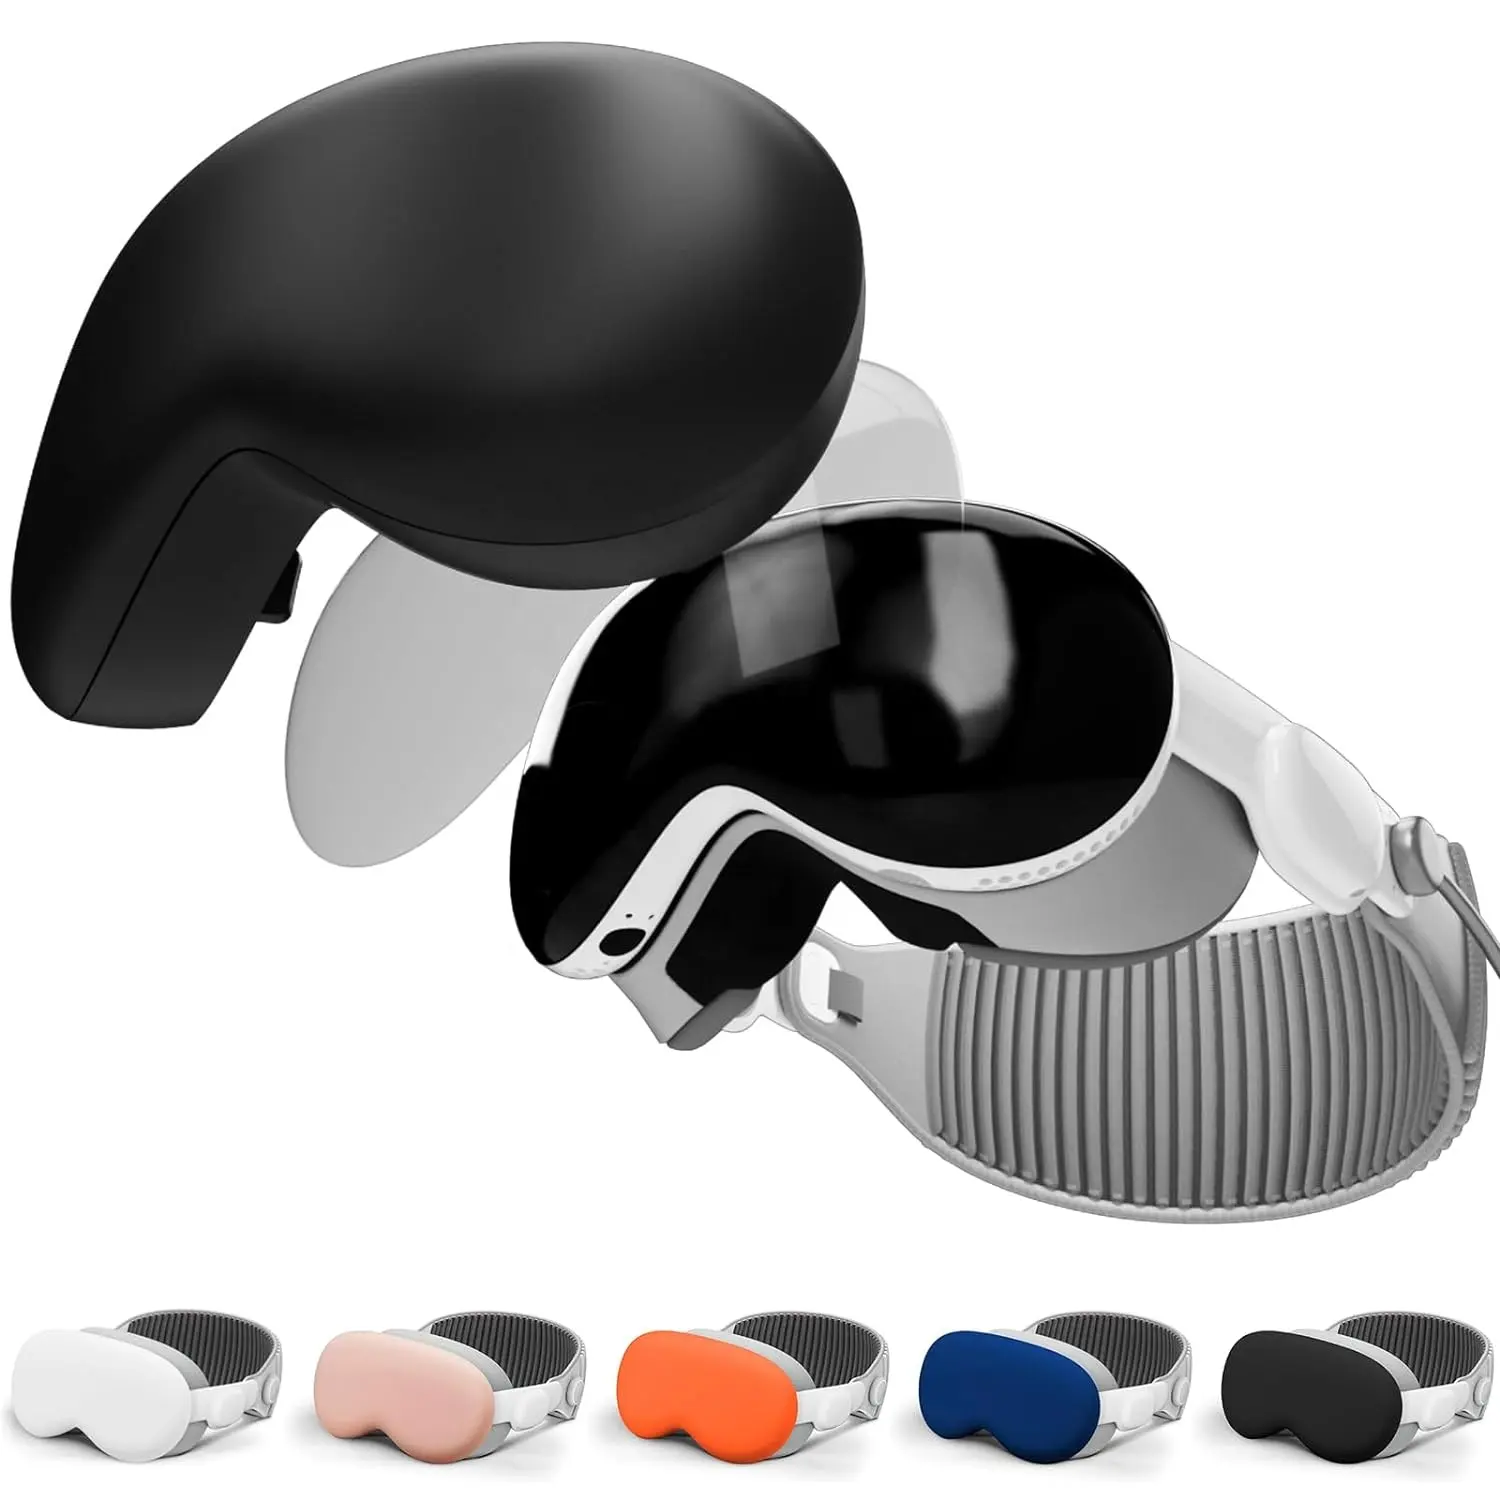 Casing pelindung silikon karet lunak VR pengawet peralatan terpasang kepala VR untuk casing Apple Vision Pro